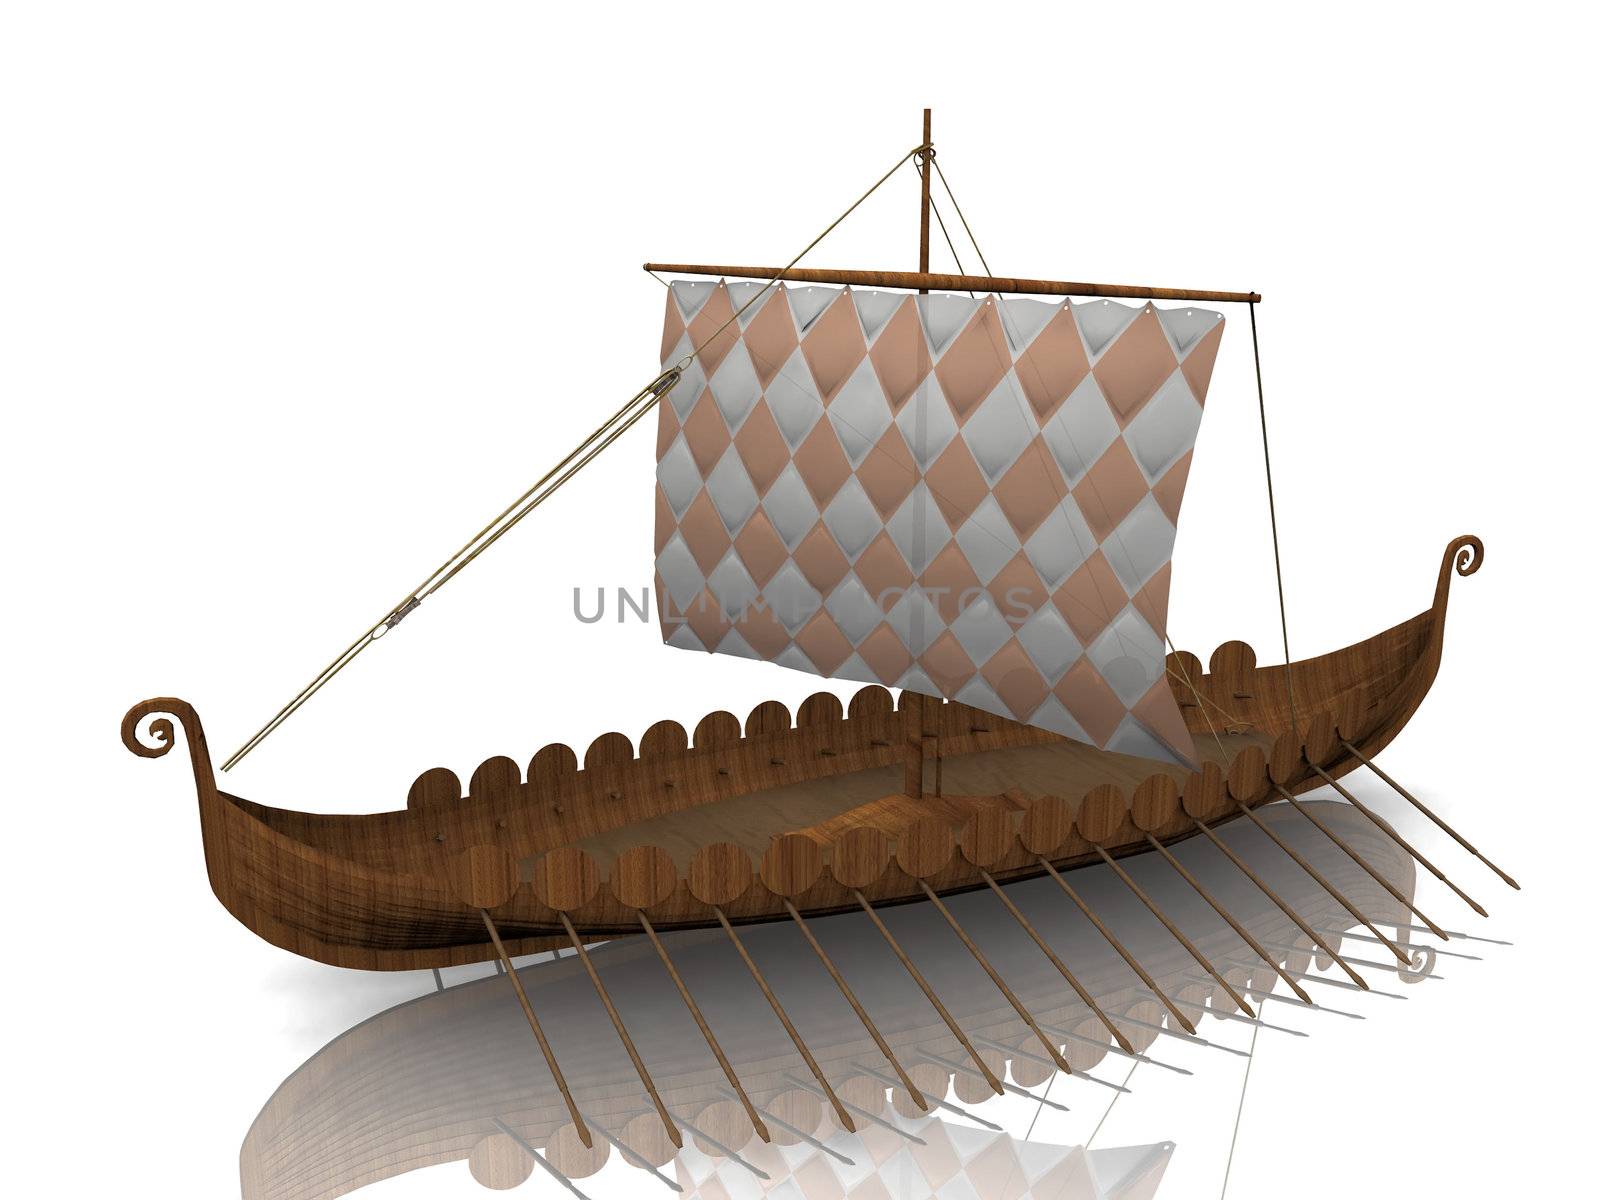 The  Viking warship on white background by njaj